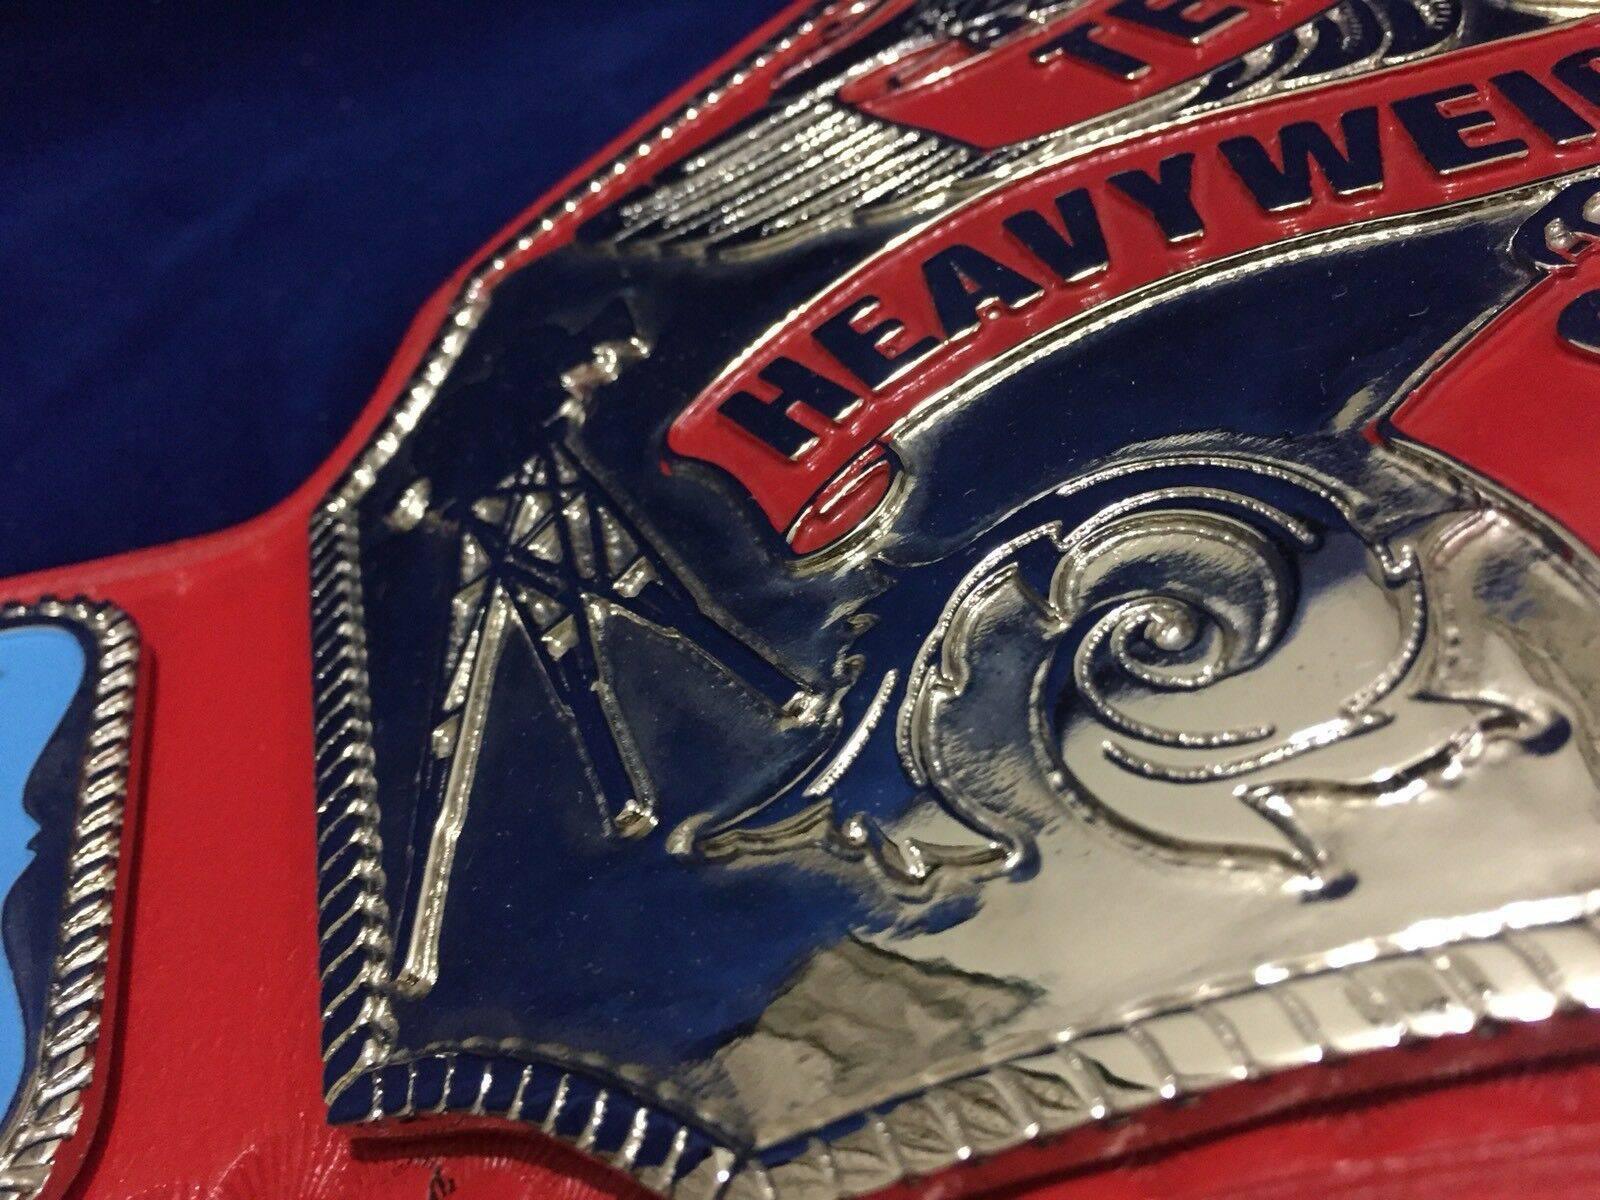 NWA Championship TELEVISION HEAVYWEIGHT 24K Nickle Zinc Championship Belt - Zees Belts